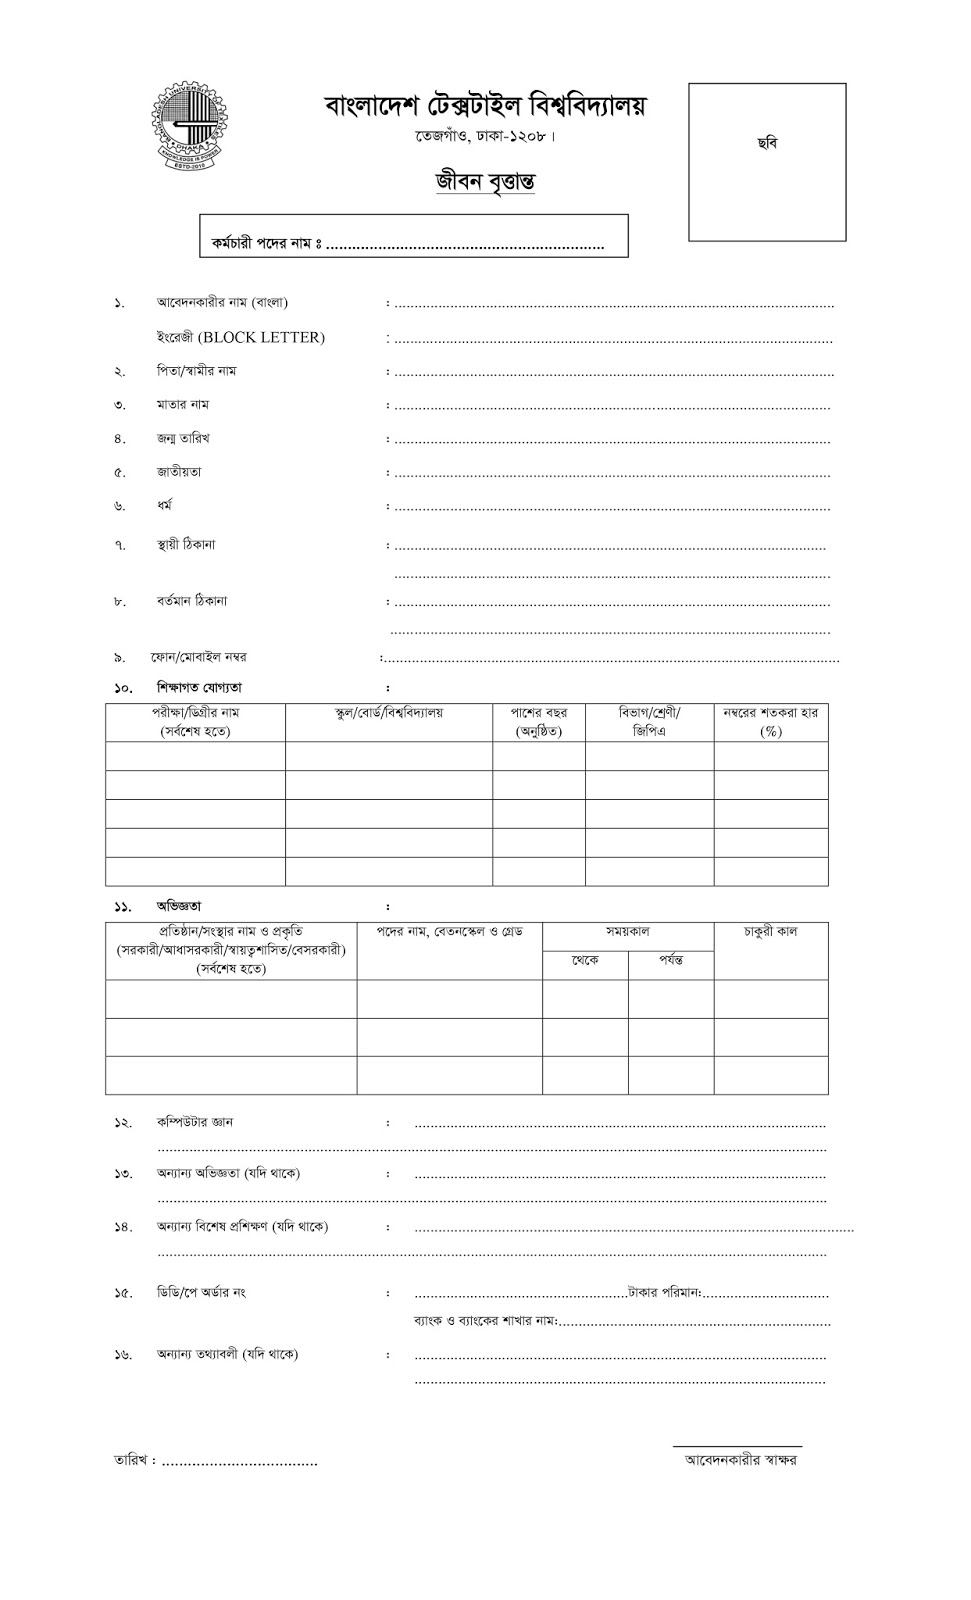 Bangladesh University of Textiles (BUTEX) Stuff Recruitment Application Form